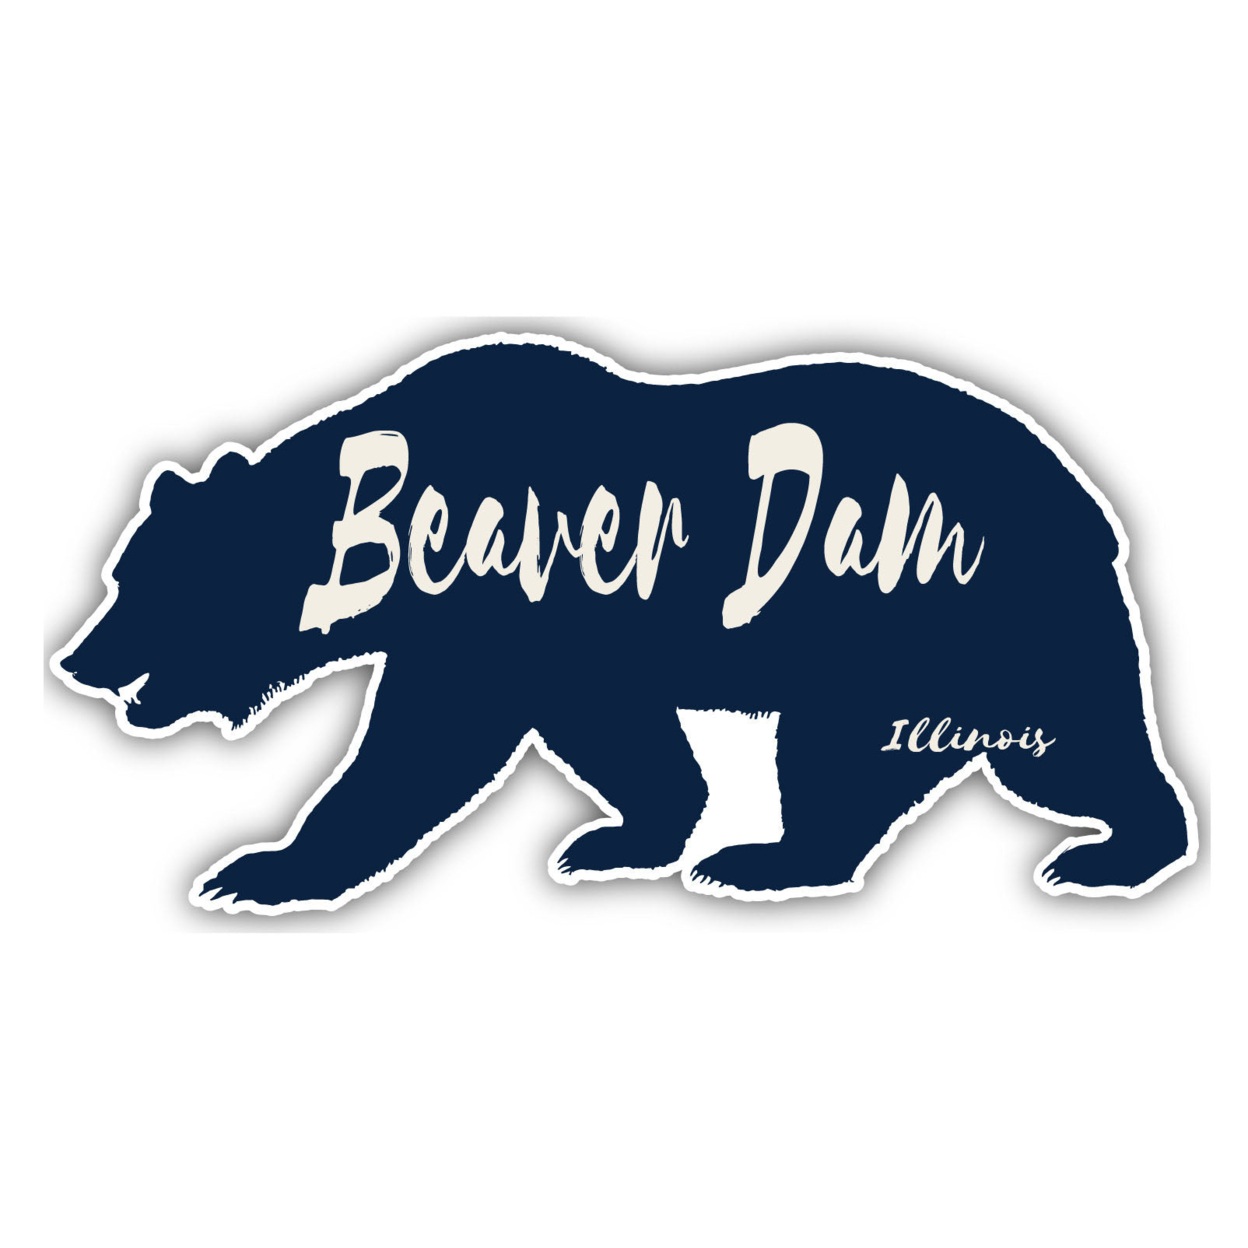 Beaver Dam Illinois Souvenir Decorative Stickers (Choose Theme And Size) - Single Unit, 4-Inch, Bear